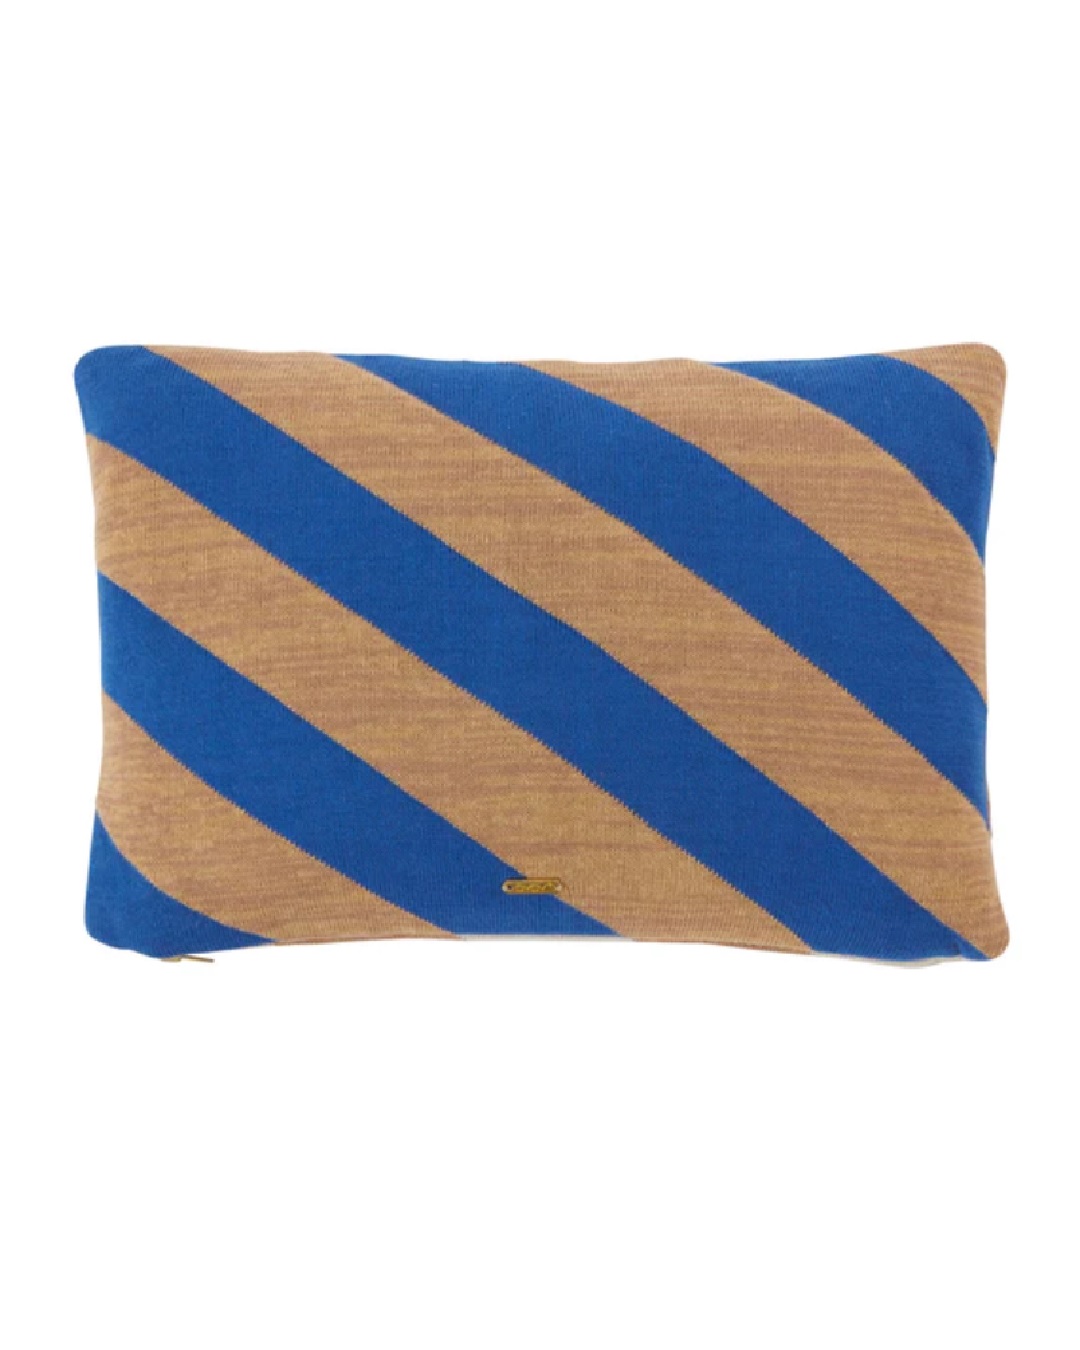 Camel and blue optic stripe cushion